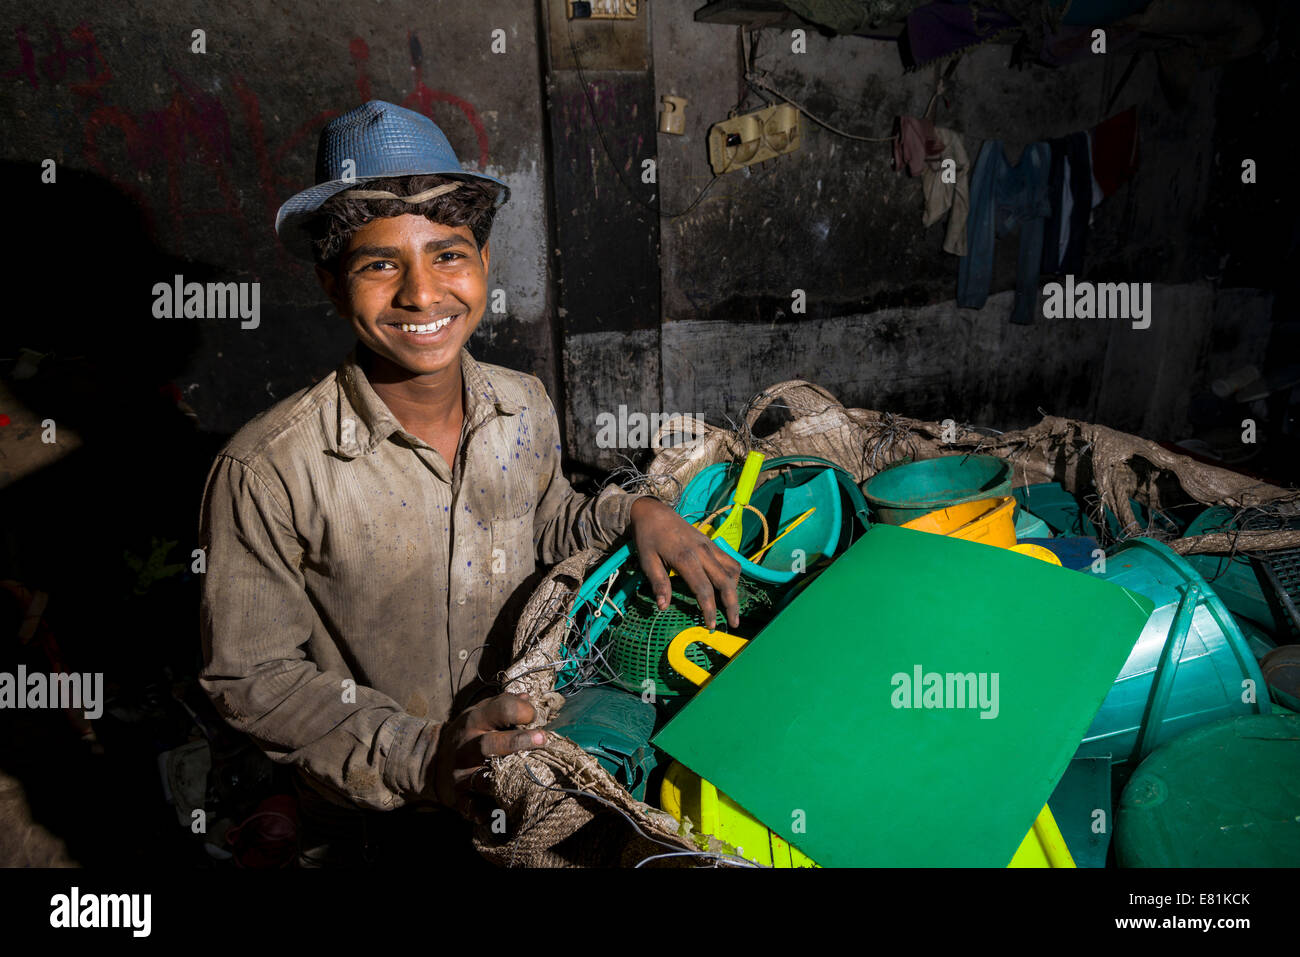 Arbeiter aussortieren Plastikmüll für recycling, Dharavi Slum, Mumbai, Maharashtra, Indien Stockfoto